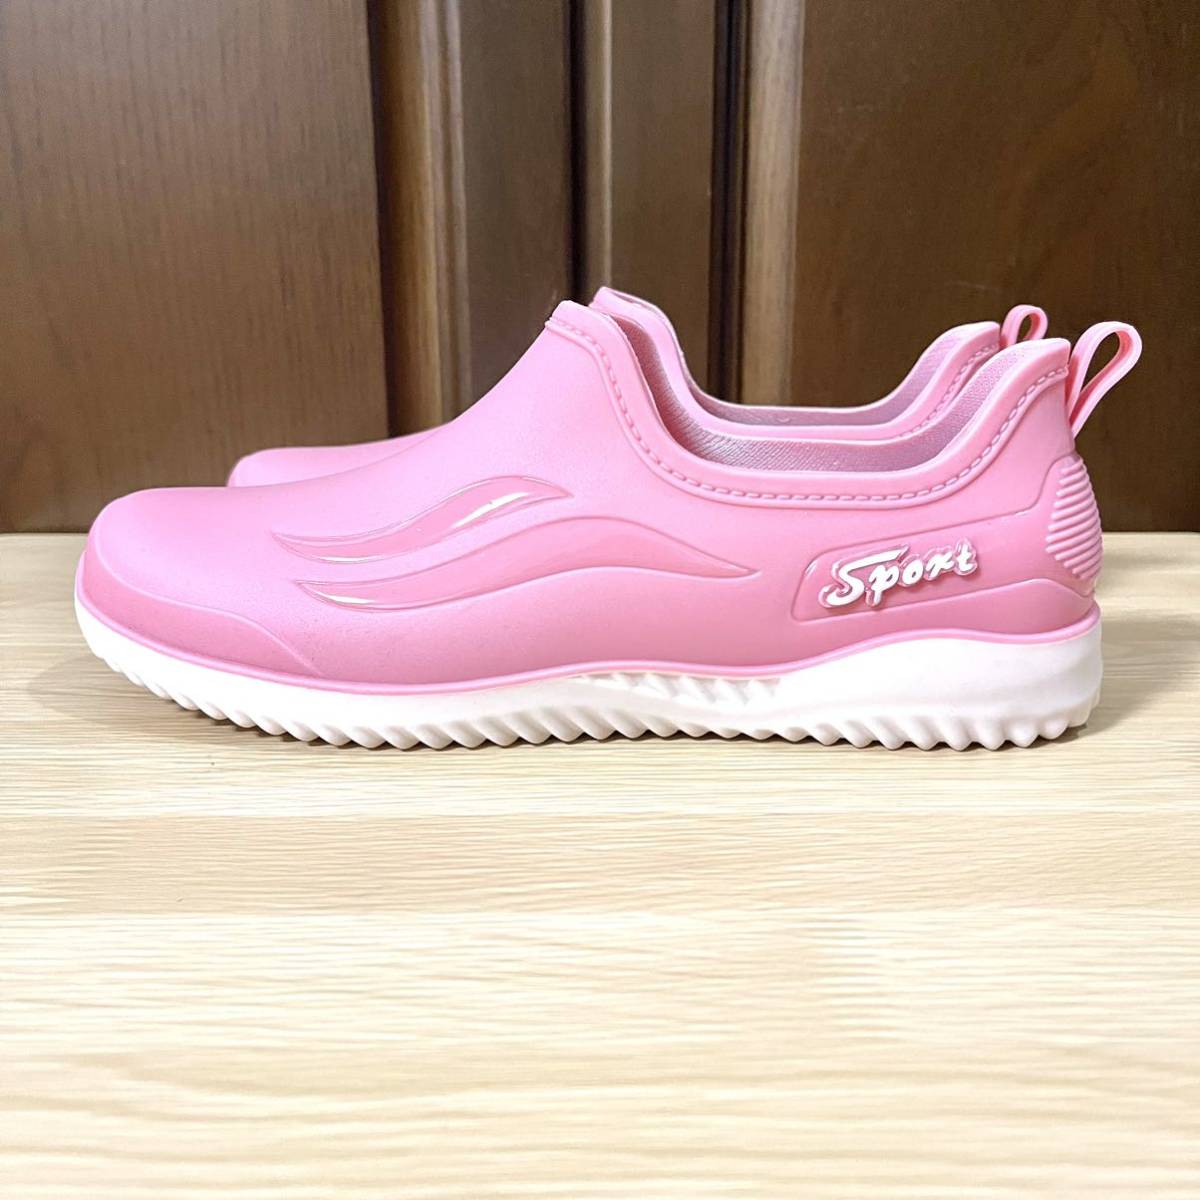  rain shoes lady's rain sneakers lovely complete waterproof ..... pink 23.0